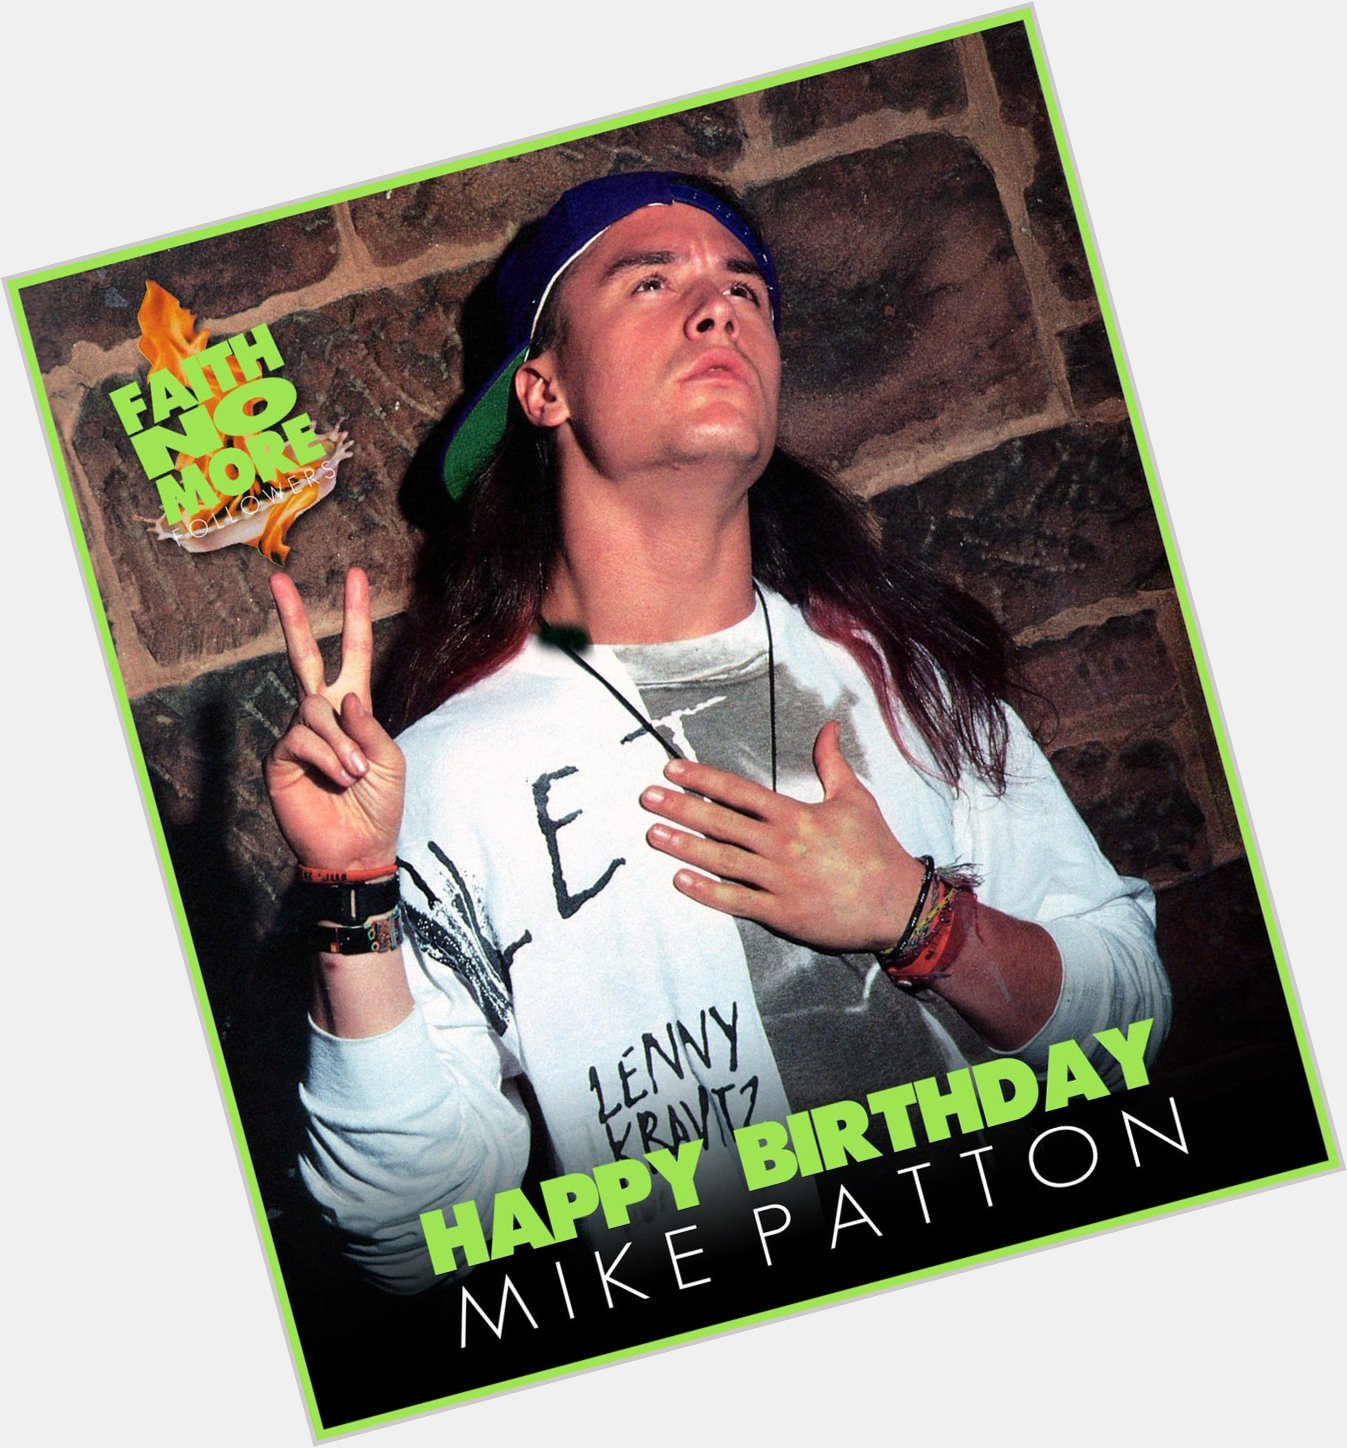 Happy birthday Mike Patton! 